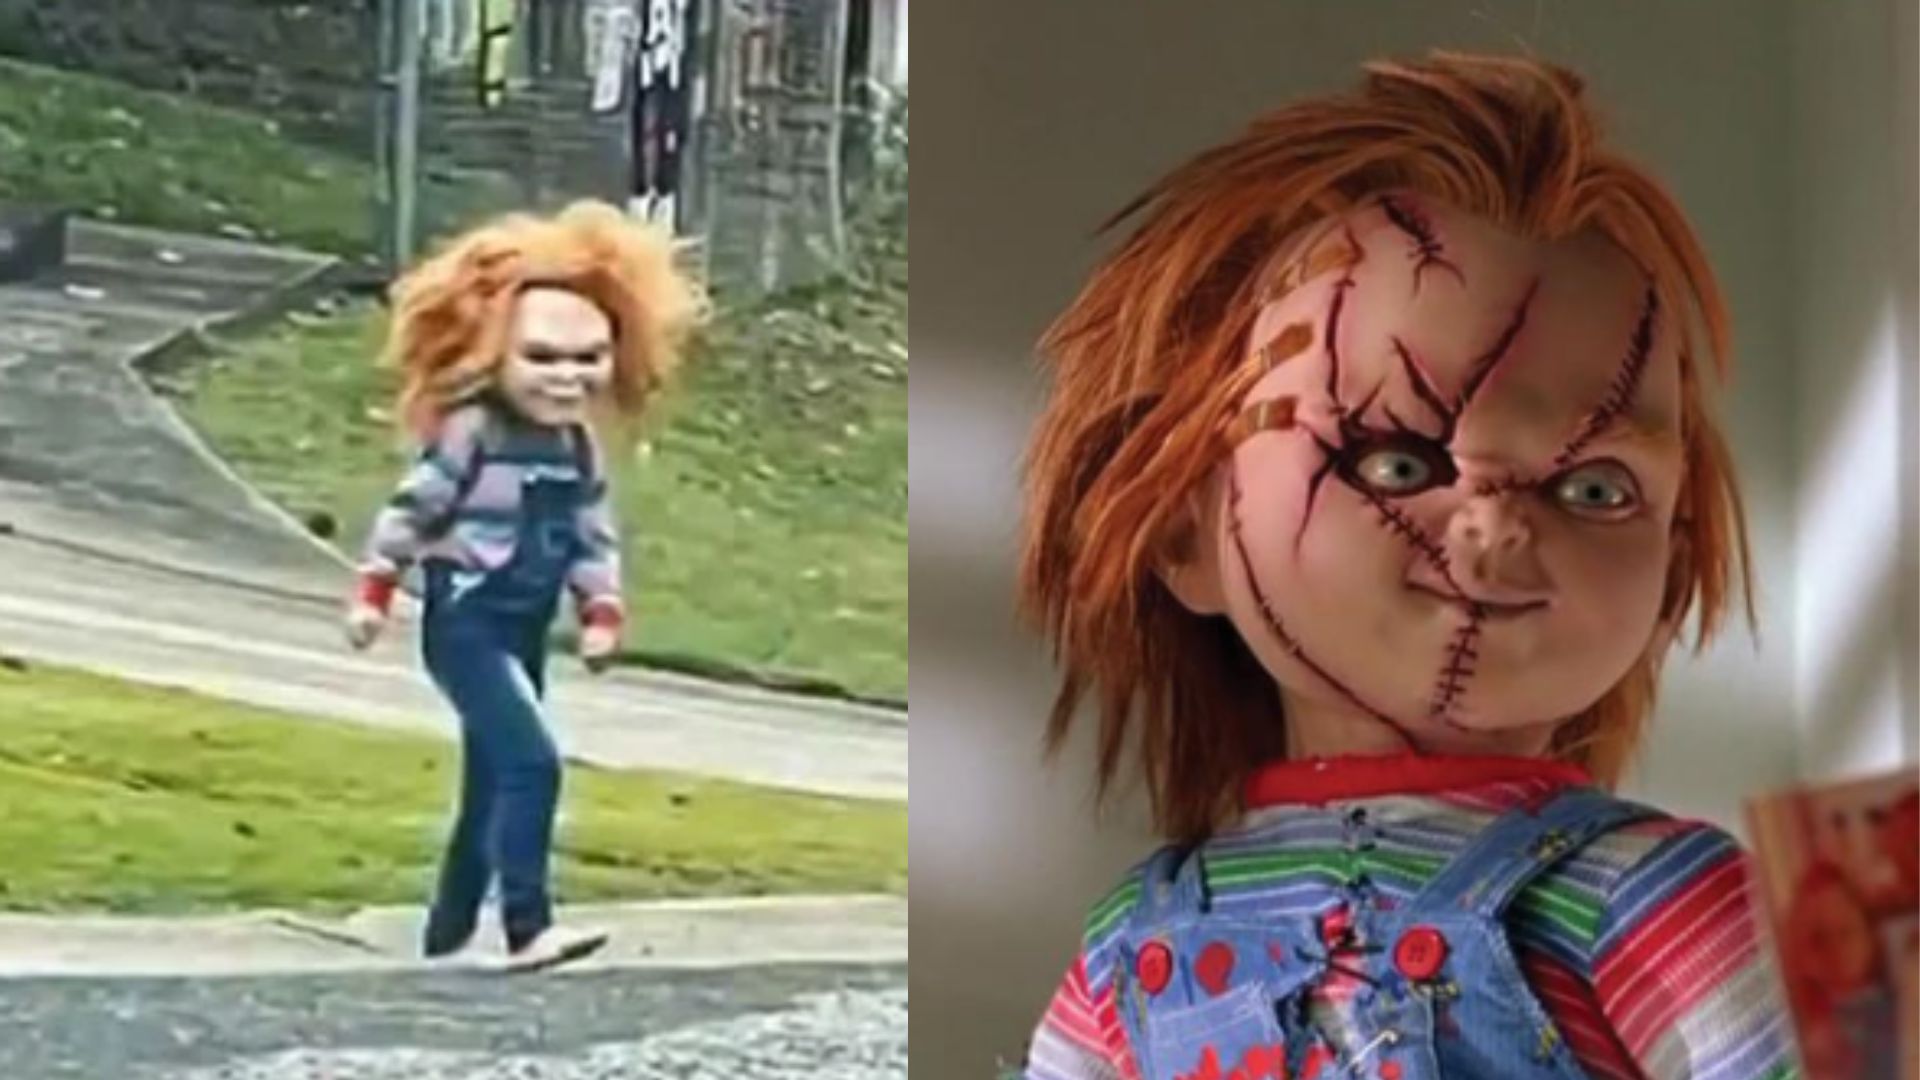 'Casi me da un infarto' con disfraz de Chucky, niño asusta a sus vecinos